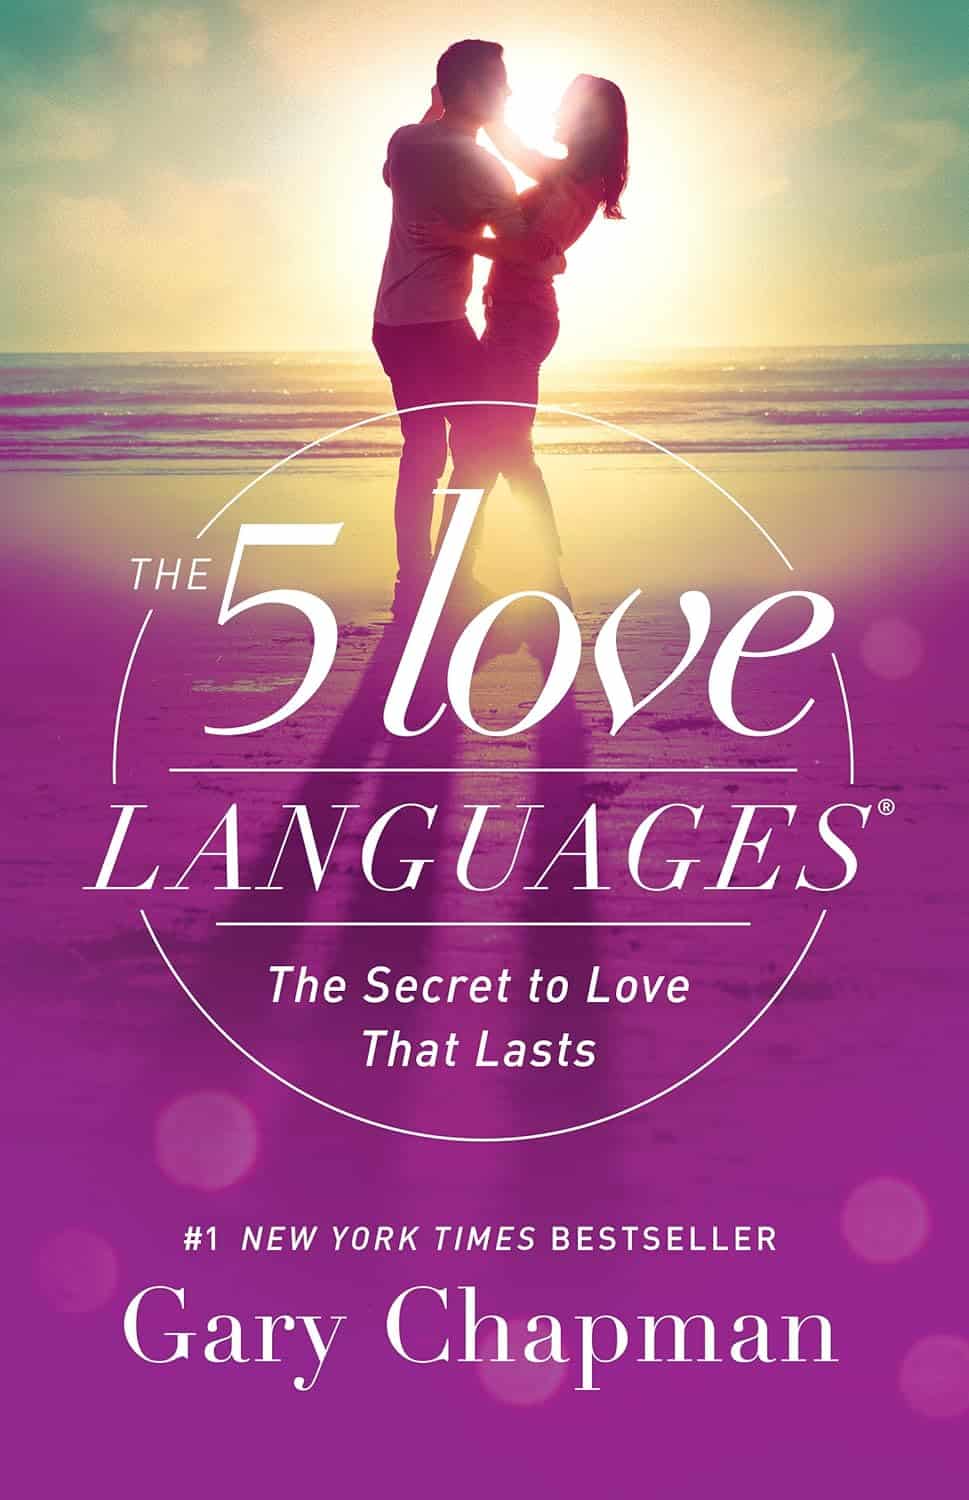 Gary Chapman The 5 Love Languages